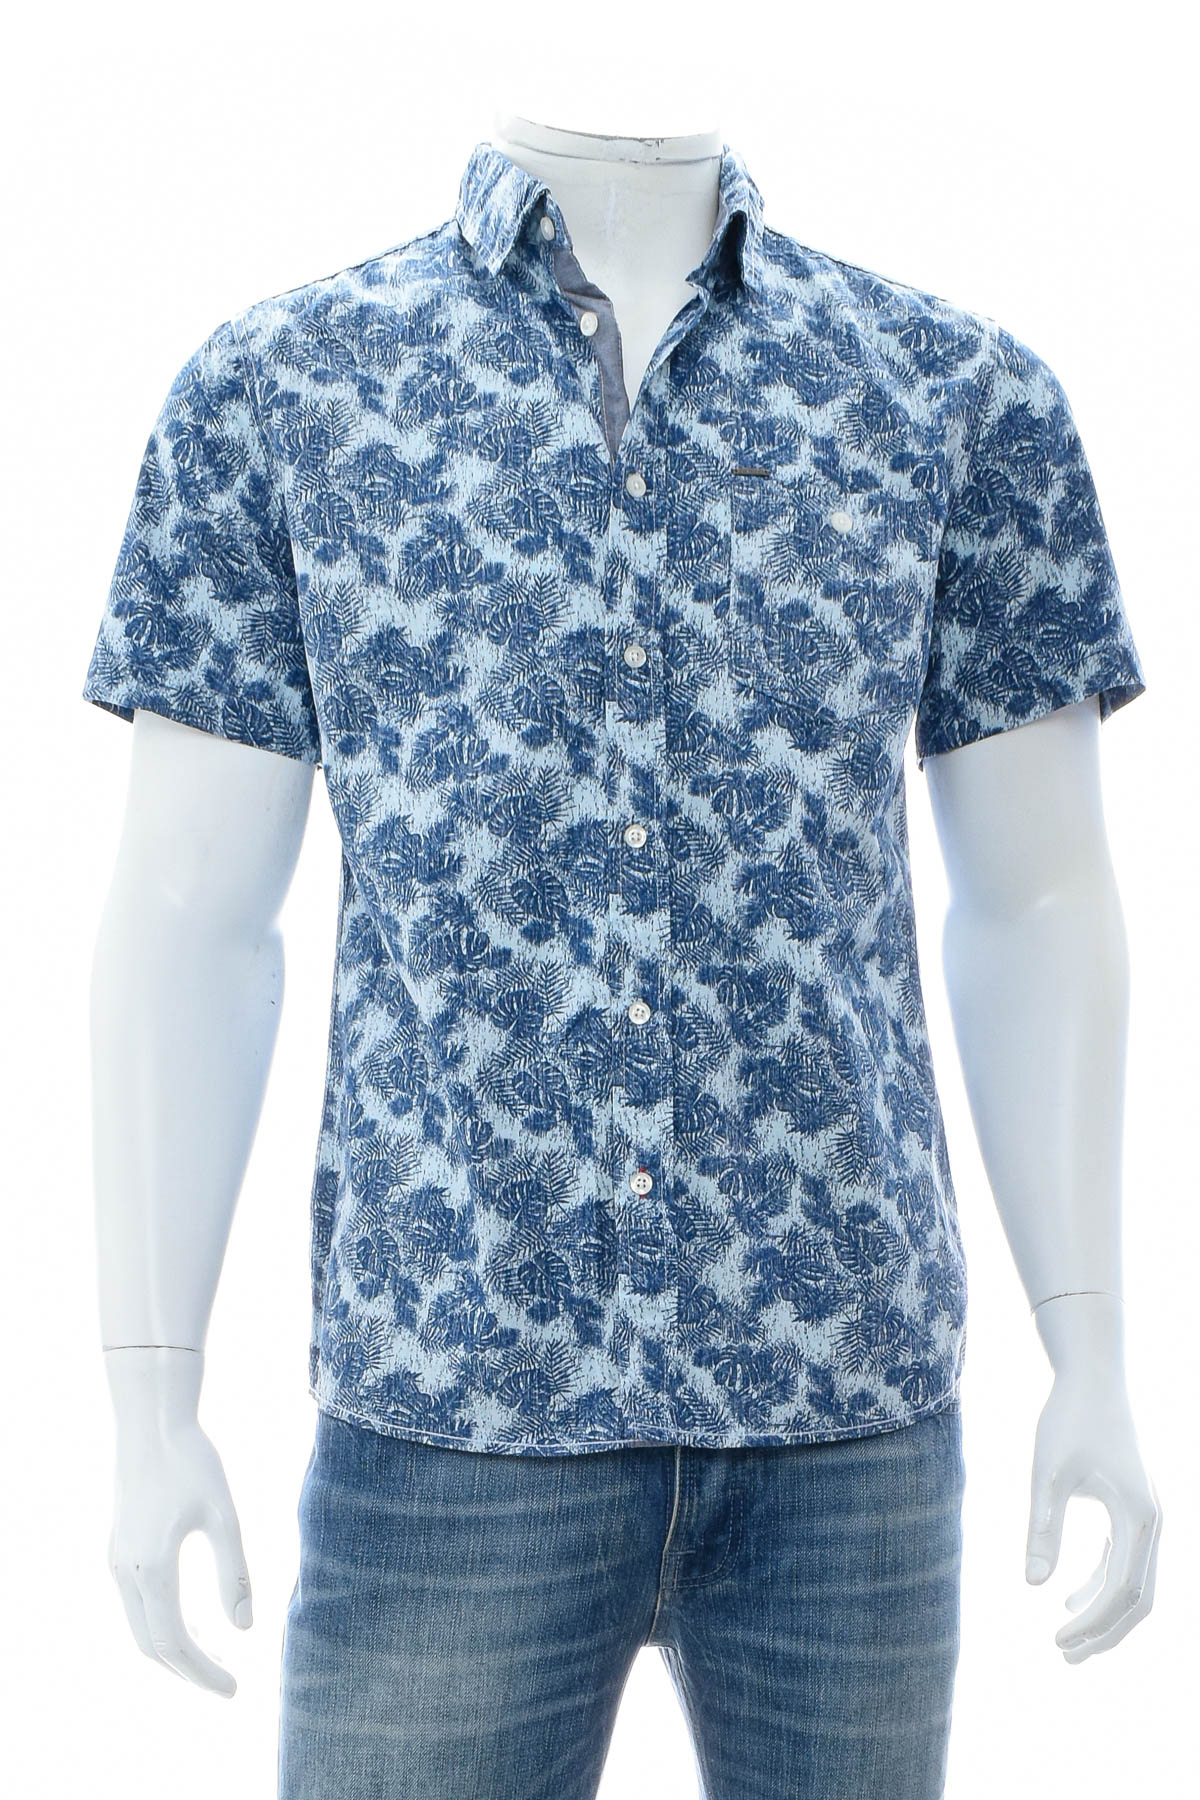 Men's shirt - Jean Pascale - 0